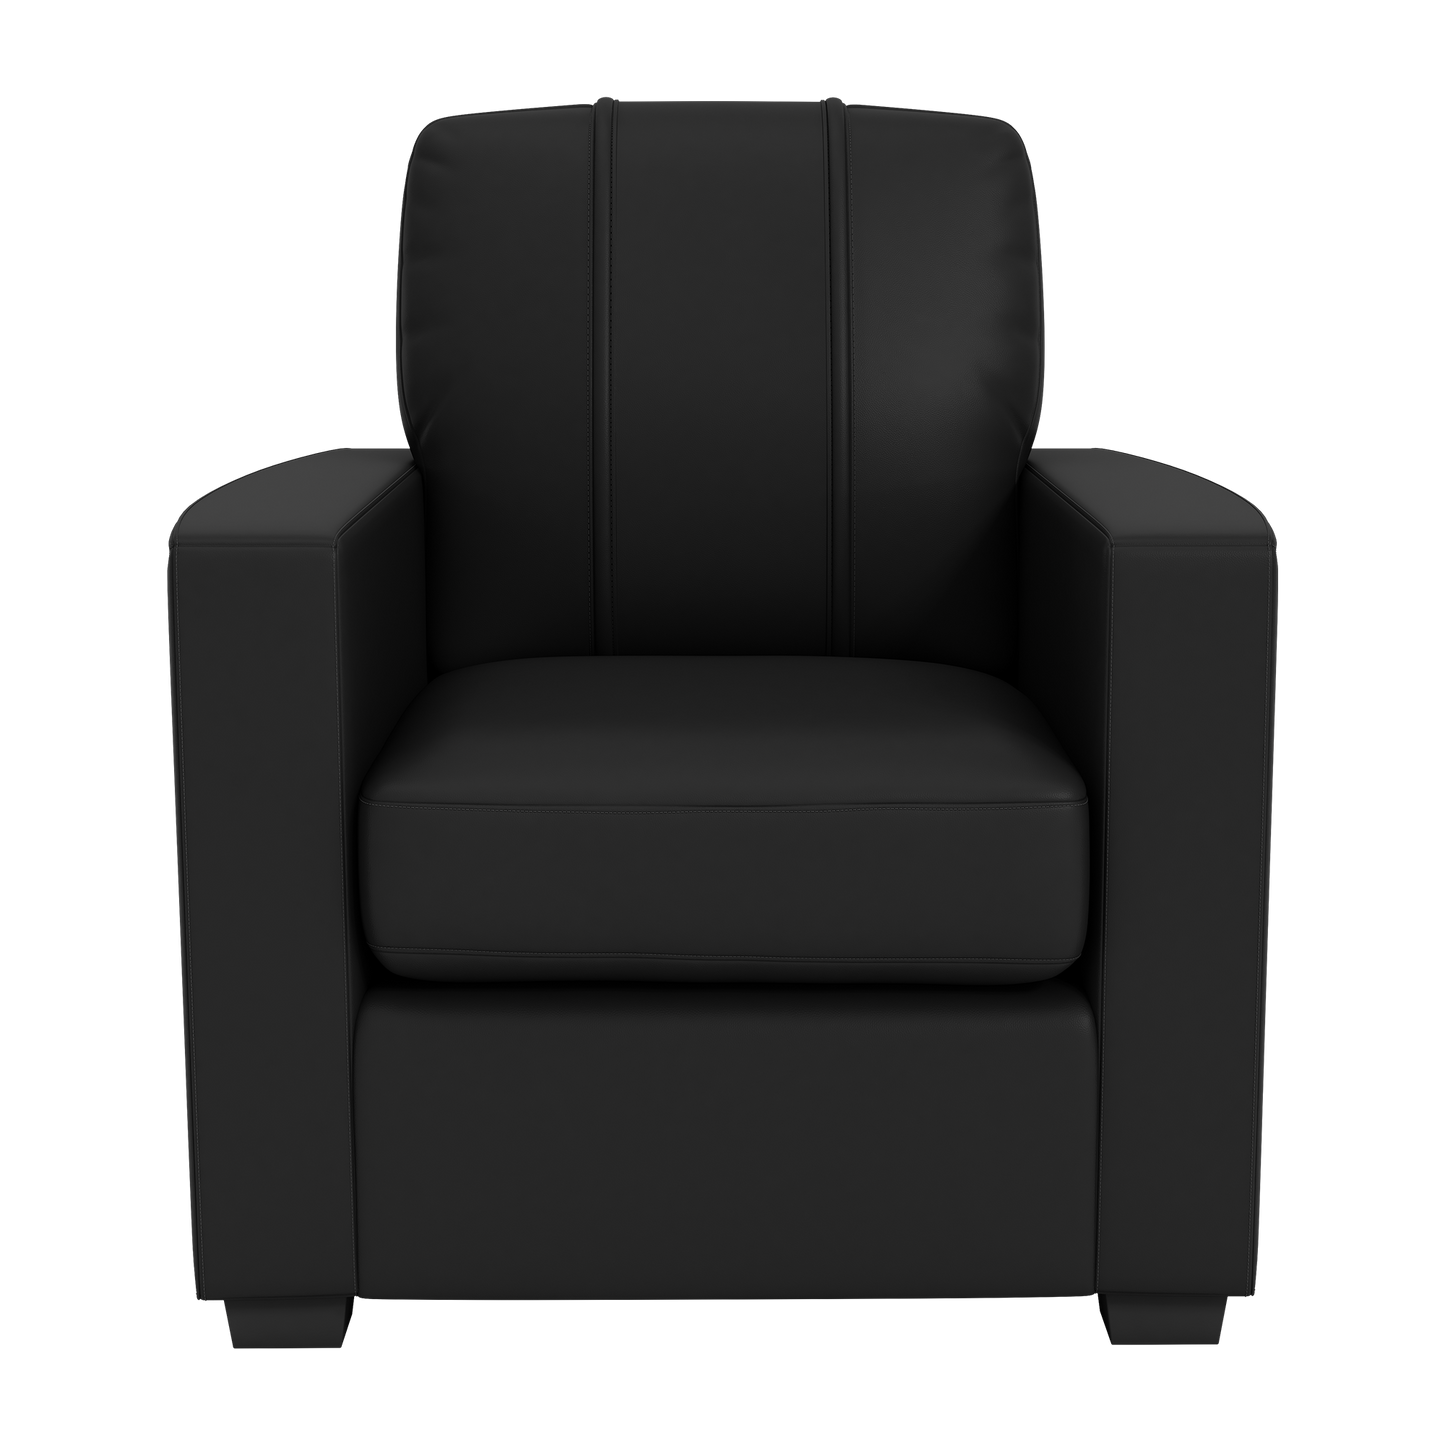 Silver Club Chair with Villanova Wordmark Logo